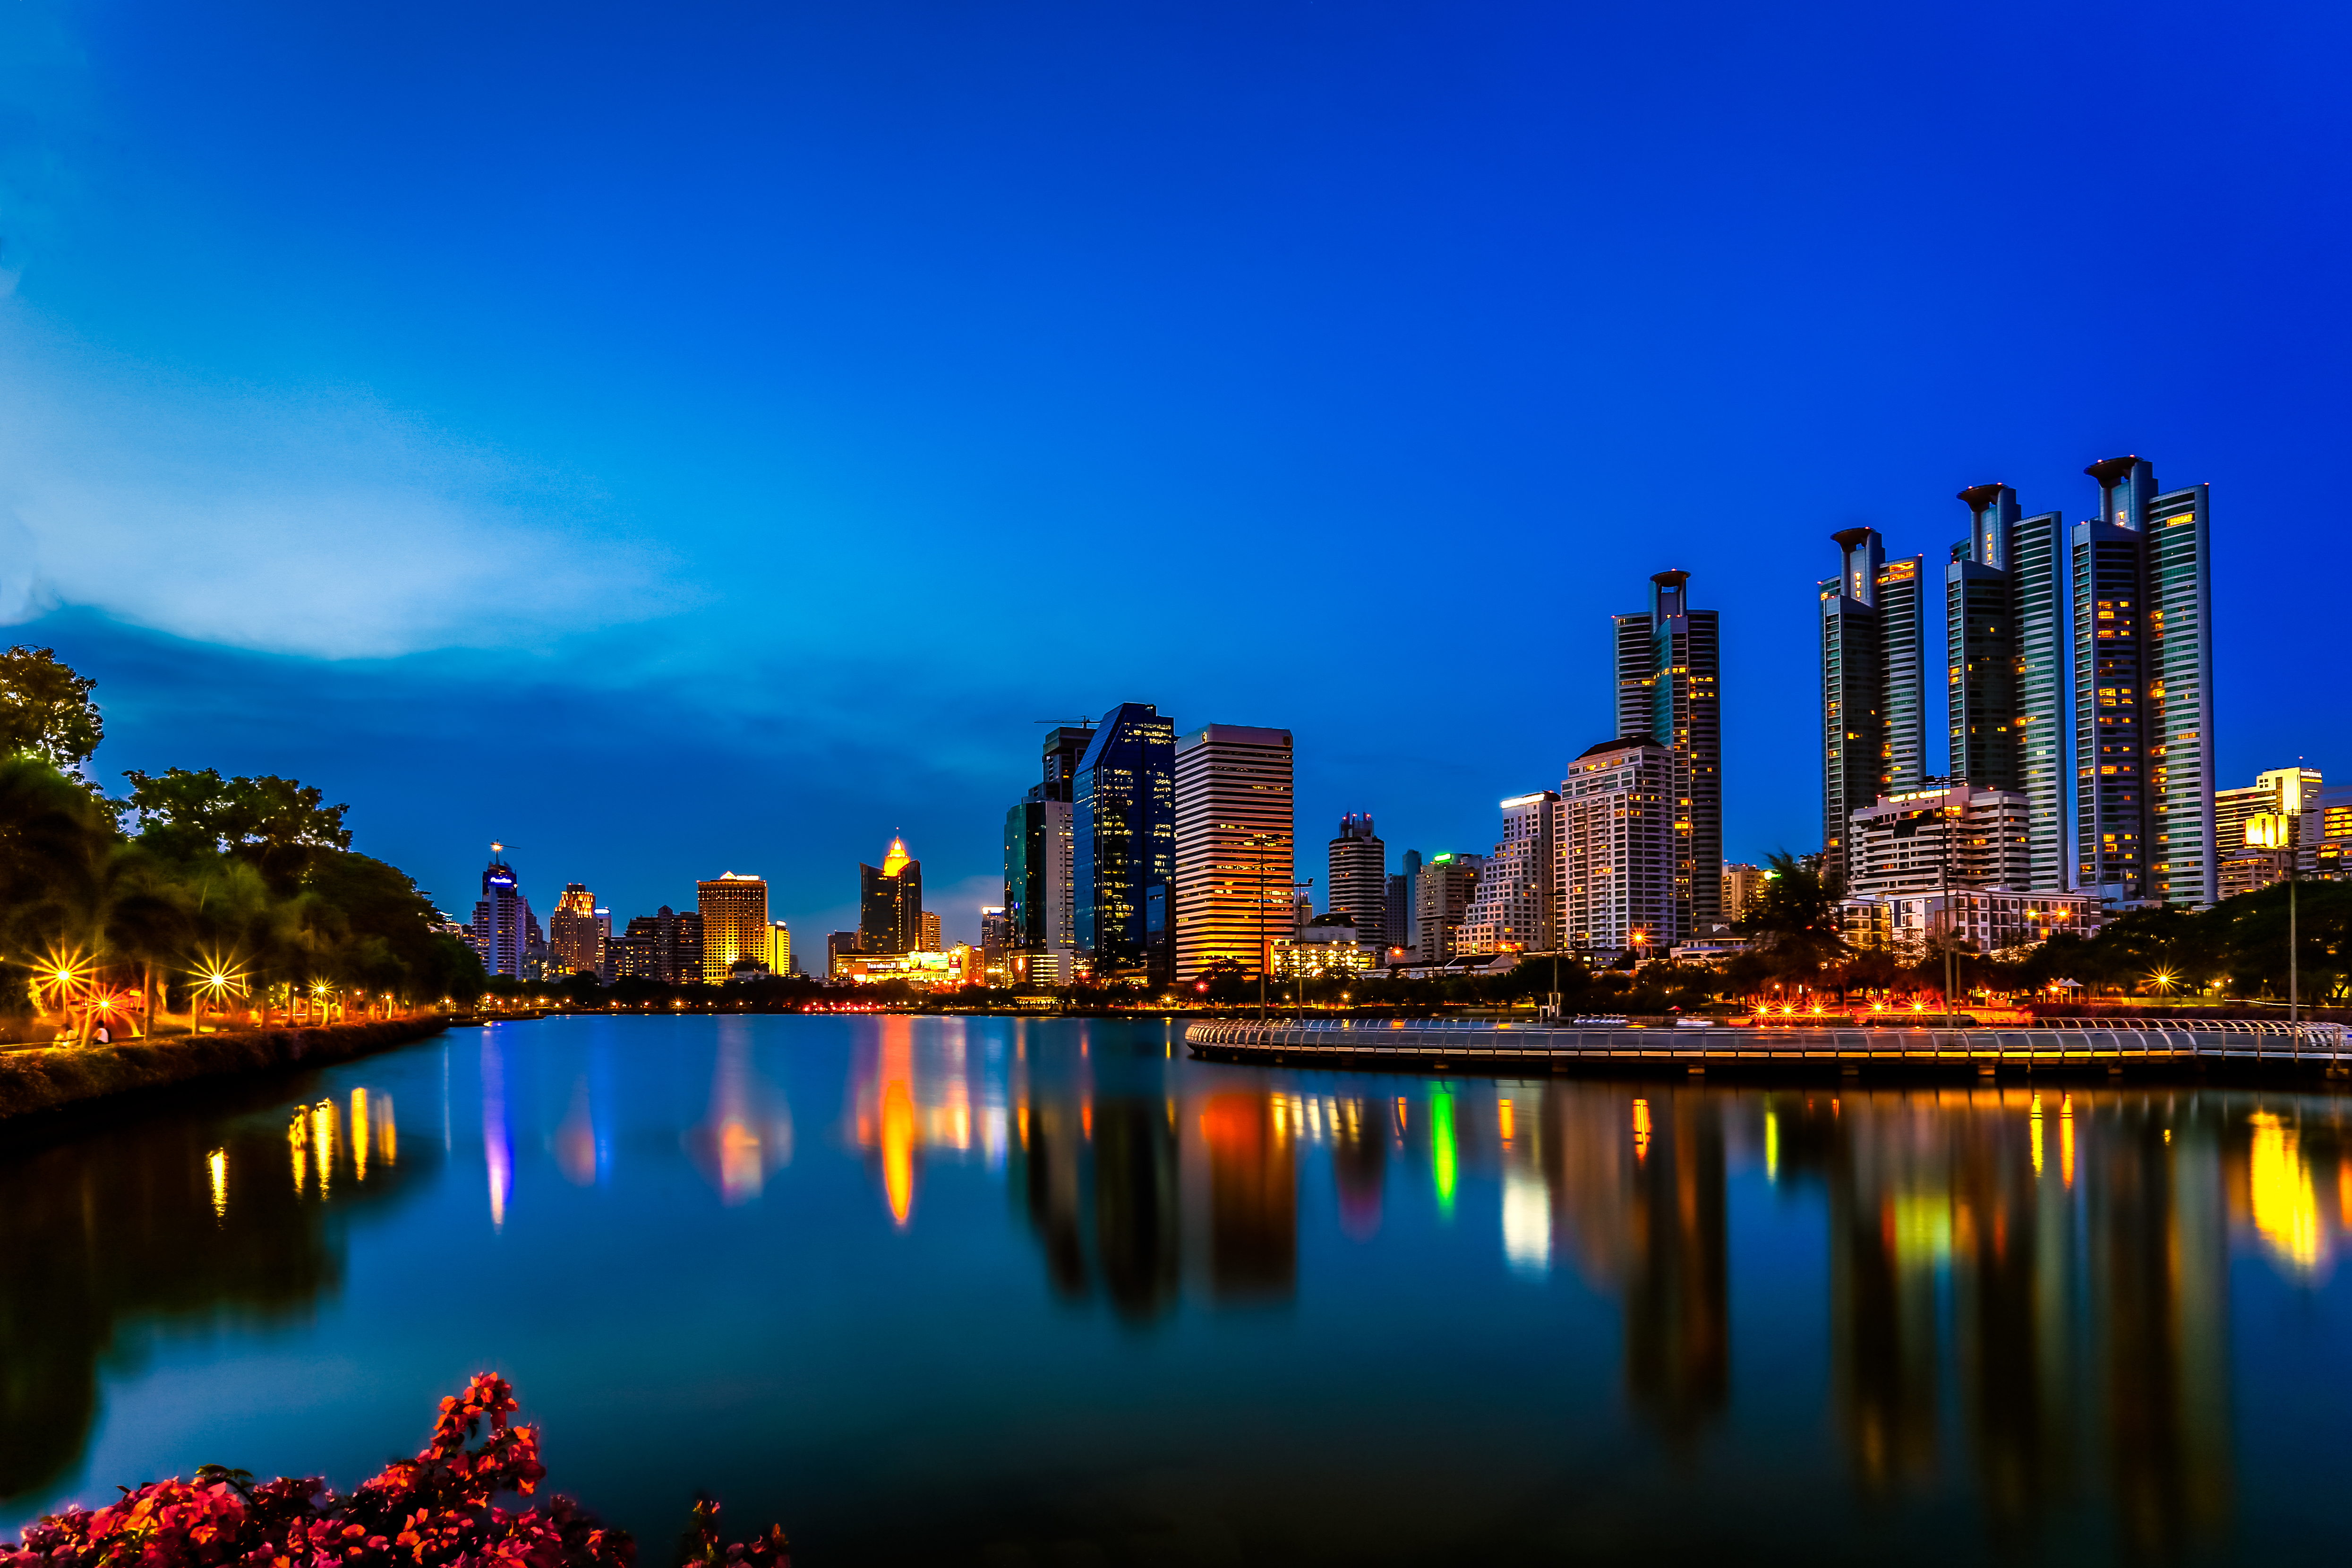  Bangkok 4k  Ultra HD Wallpaper Background Image 